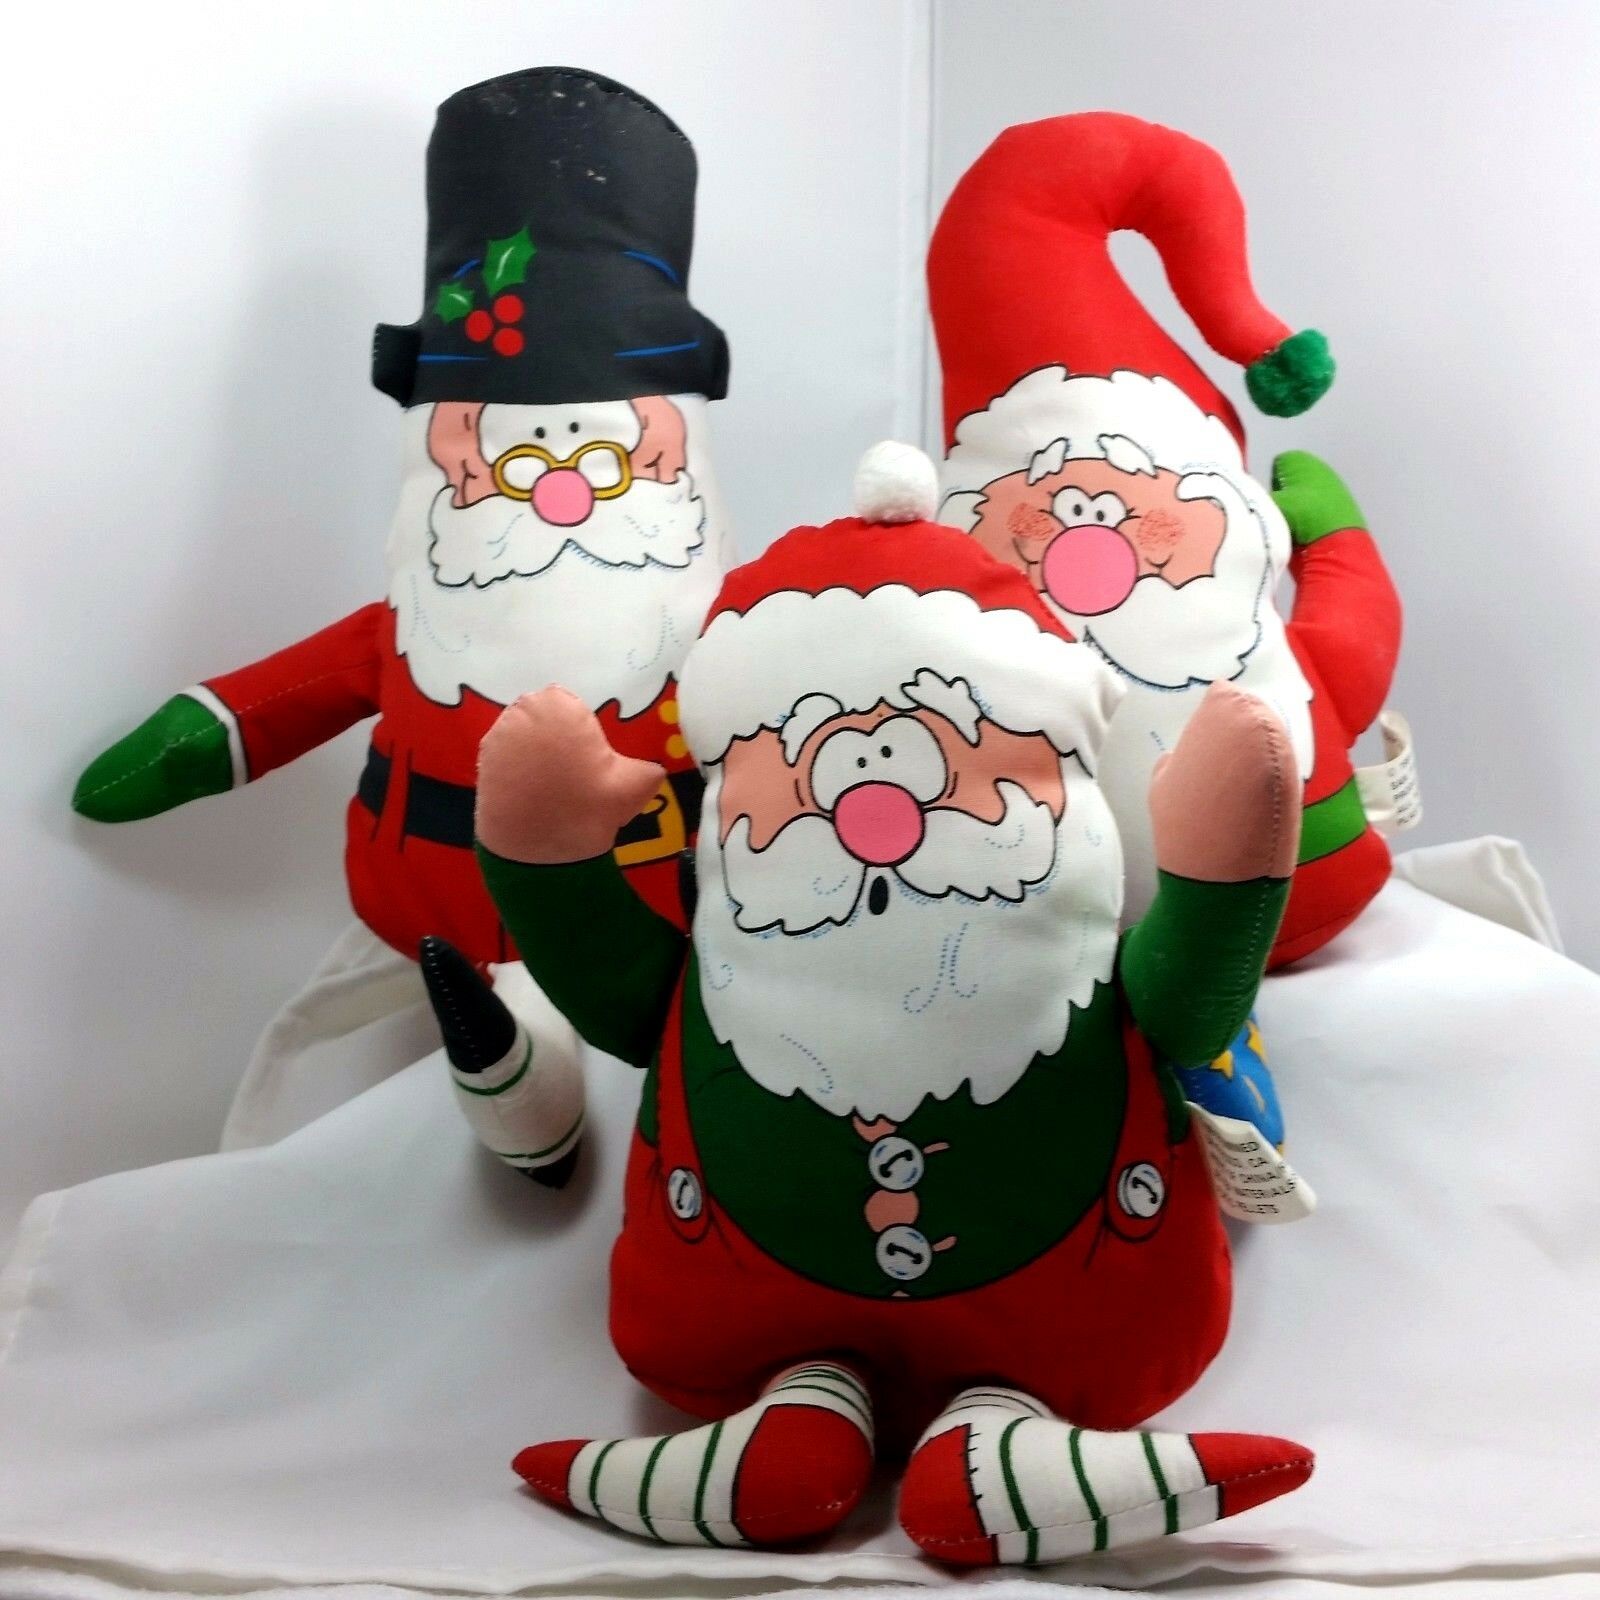 Vintage Santa Claus Christmas Plush Figures Stuffed Shelf Sitters Decoration - At Grandma's Table